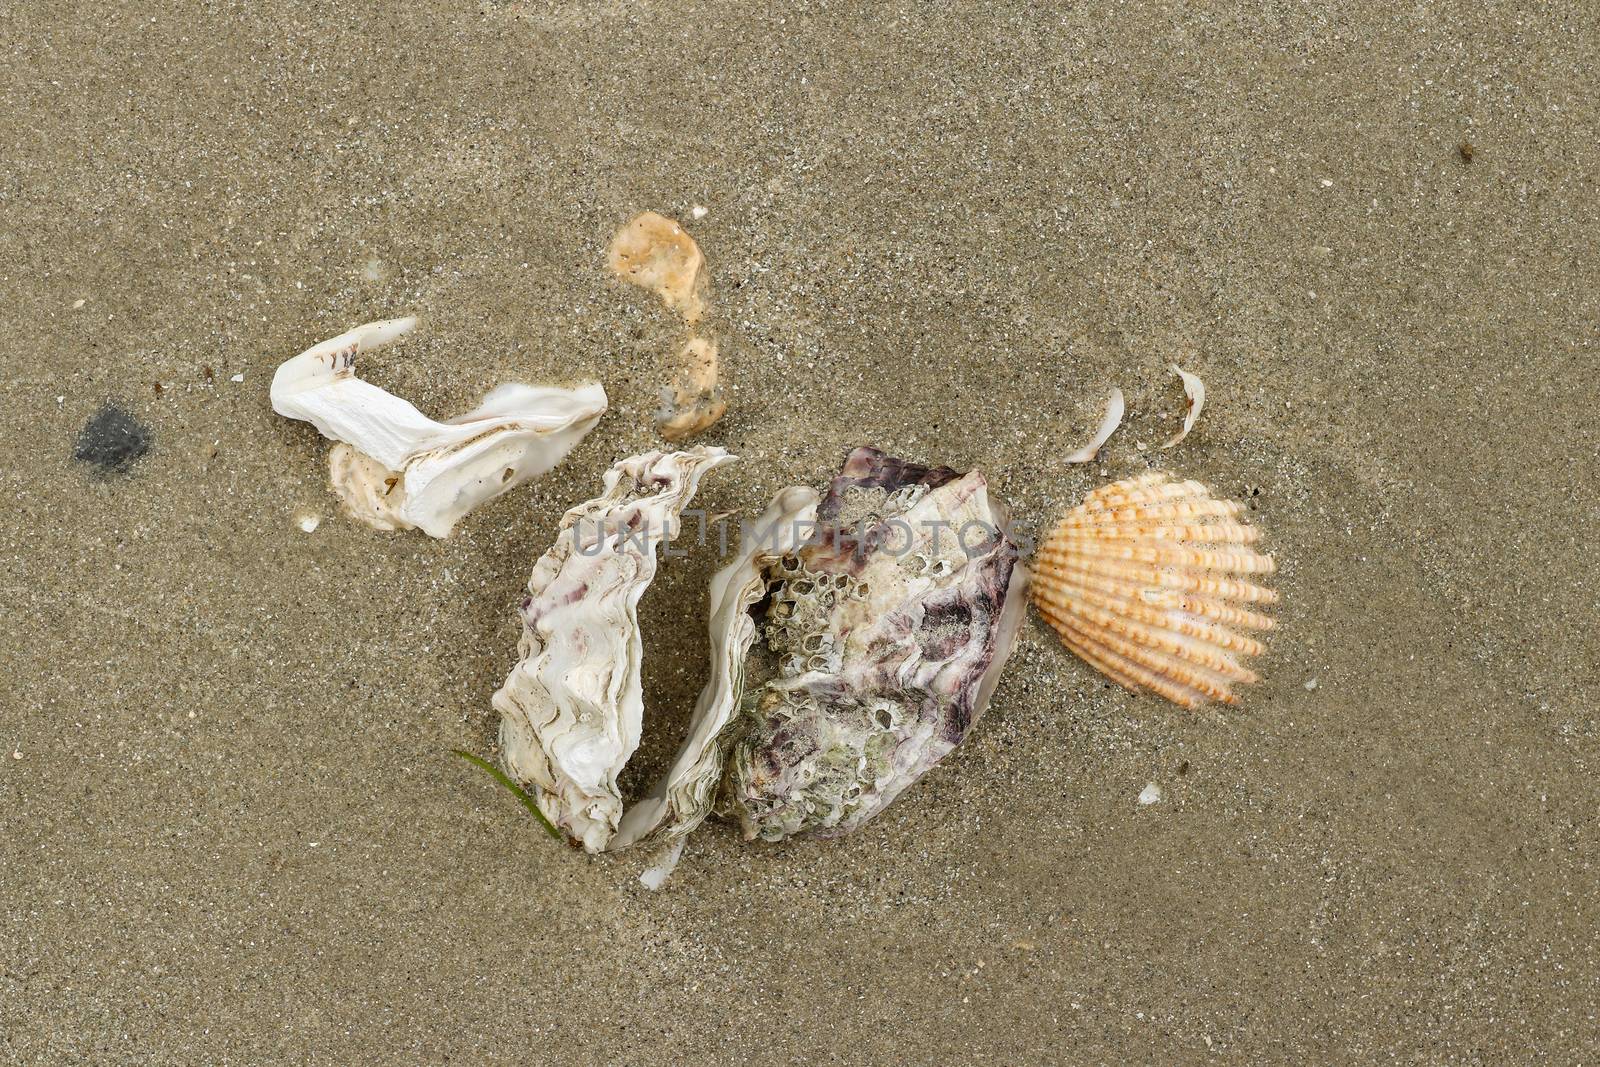 Shells of various molluscs on the sandy beach